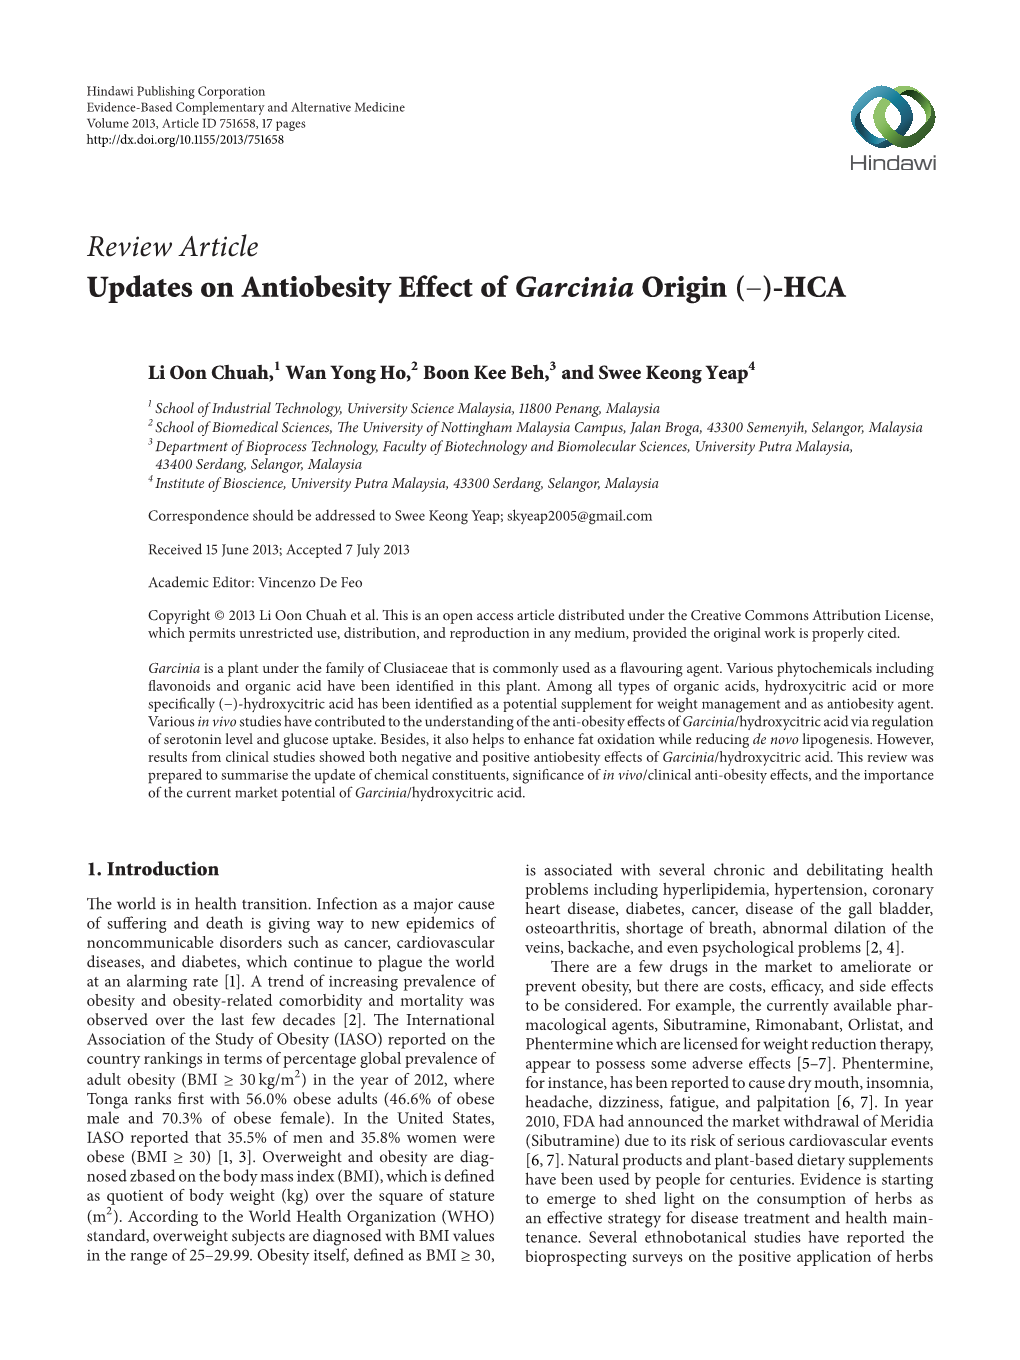 Review Article Updates on Antiobesity Effect of Garcinia Origin (−)-HCA